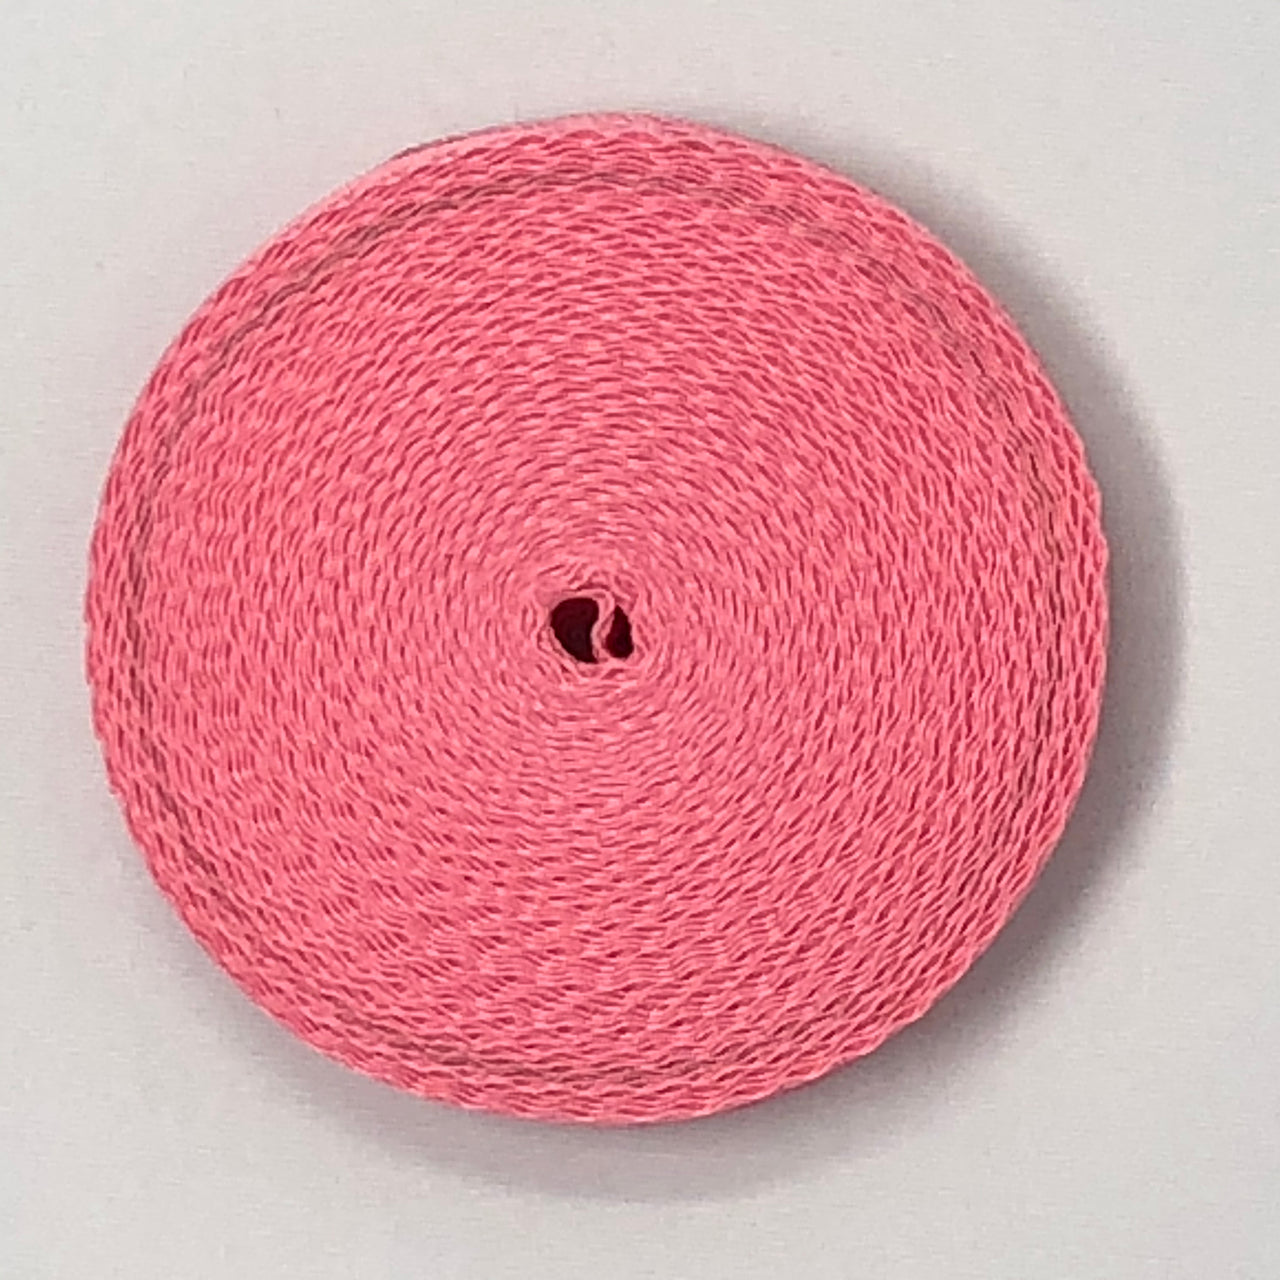 Legal String Pink (1 PC)